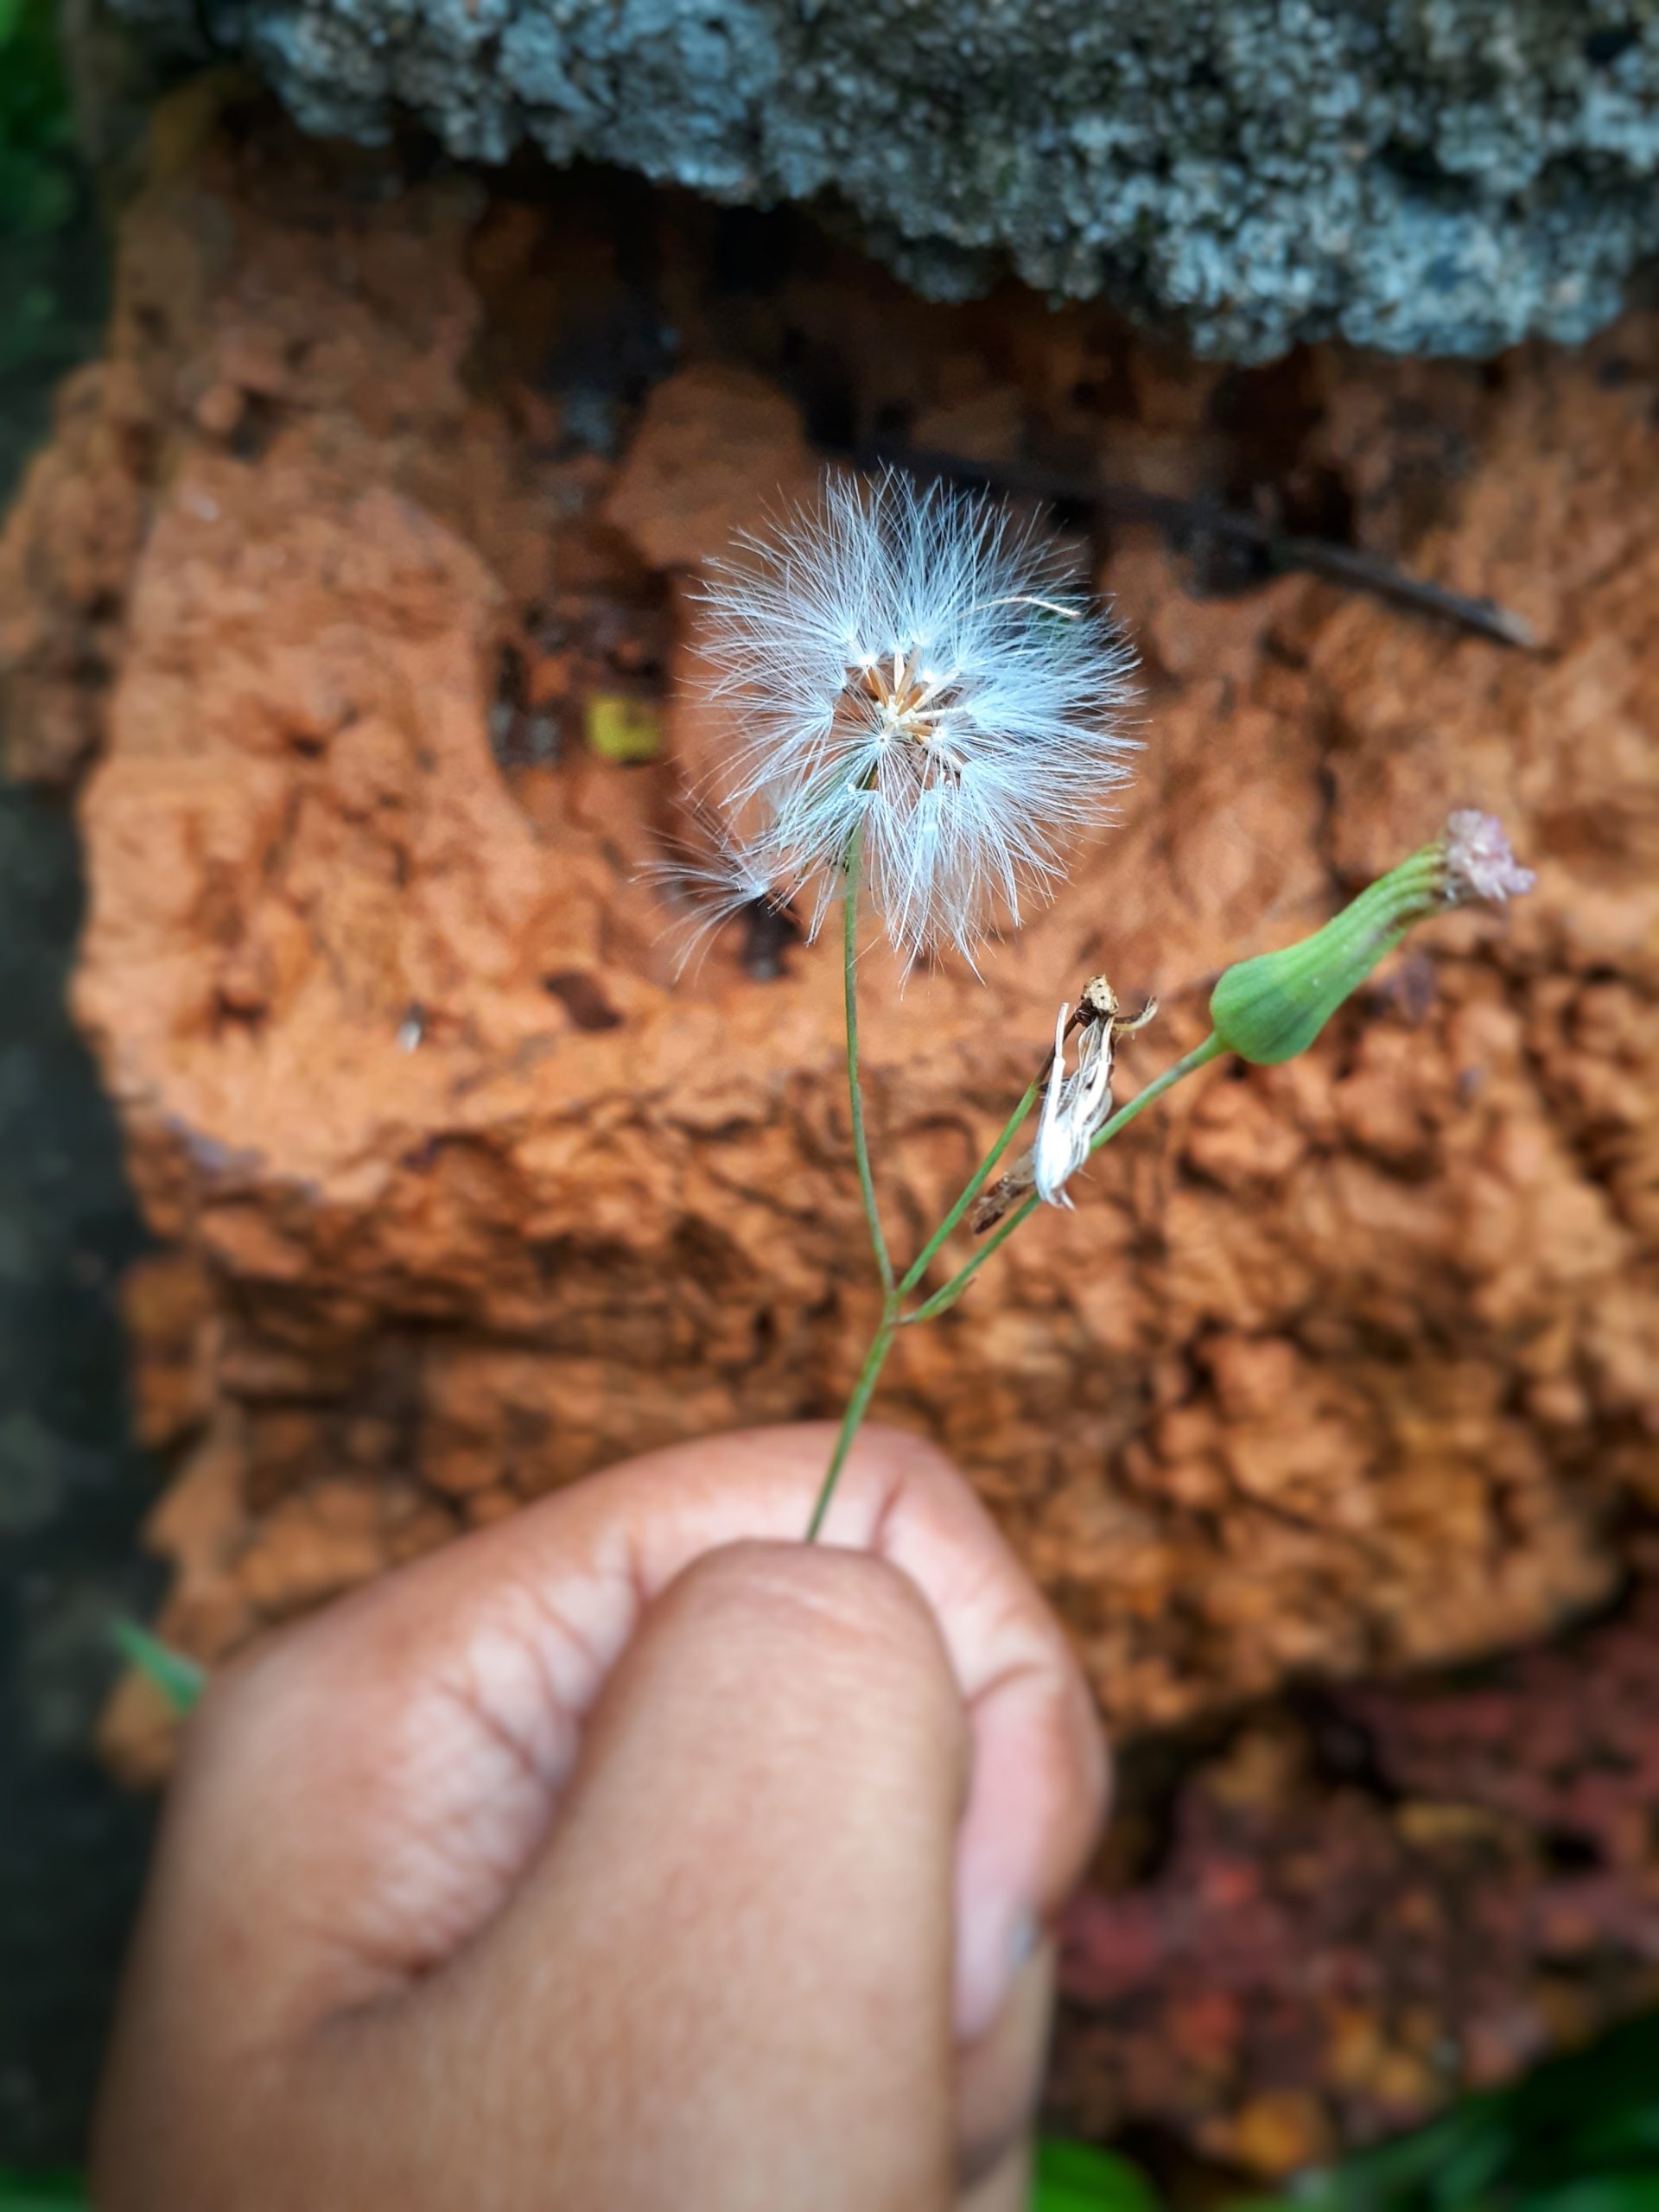 A wind flower in hand